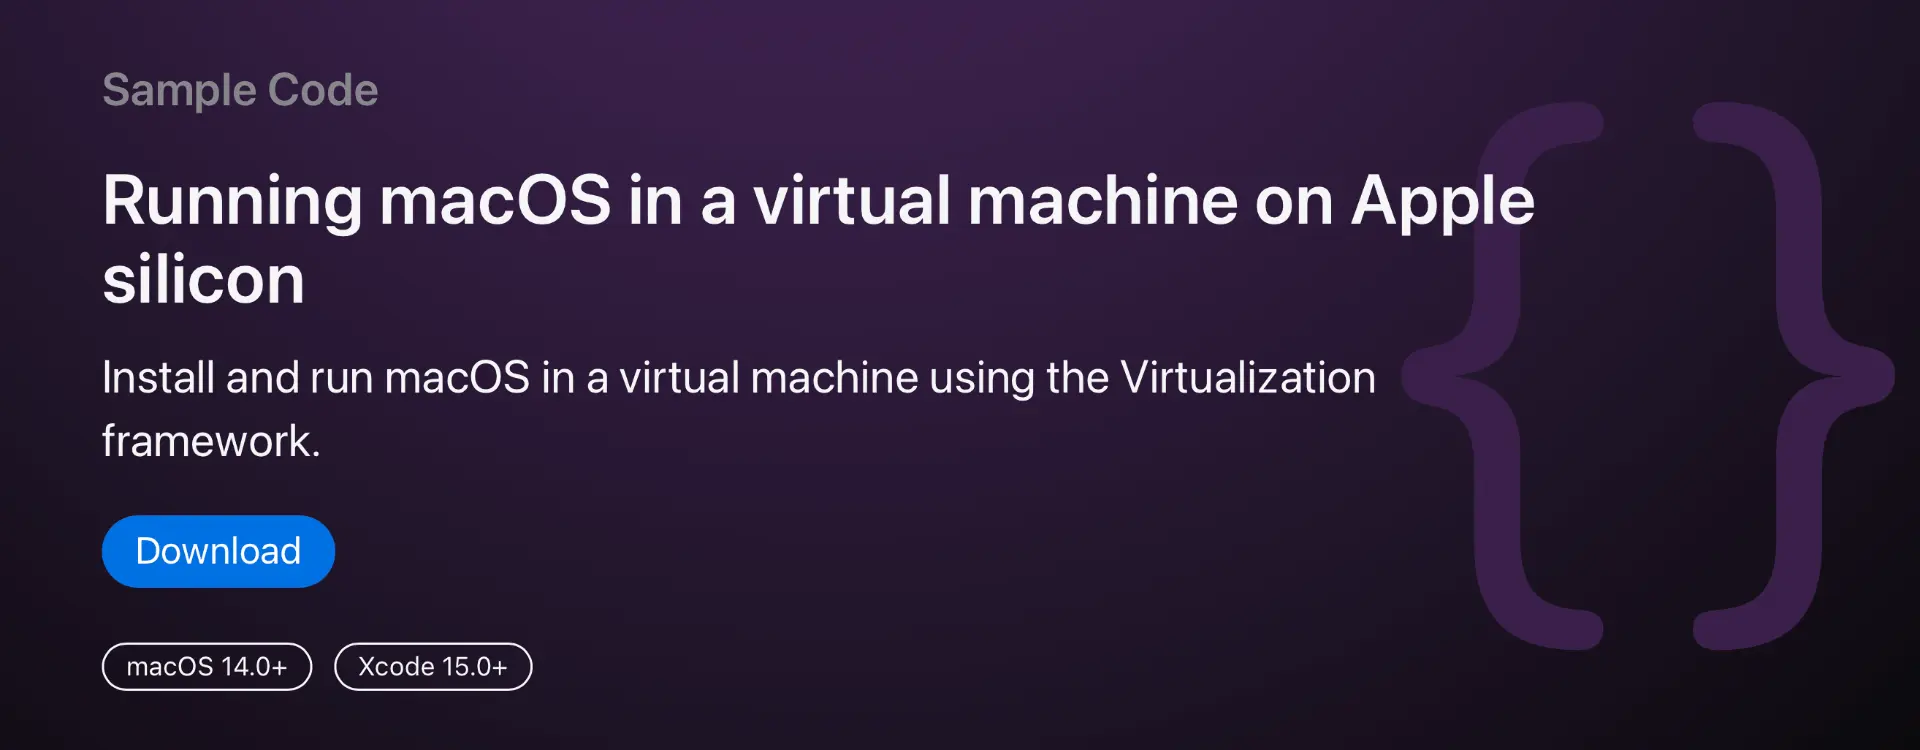 Virtualization Tutorial